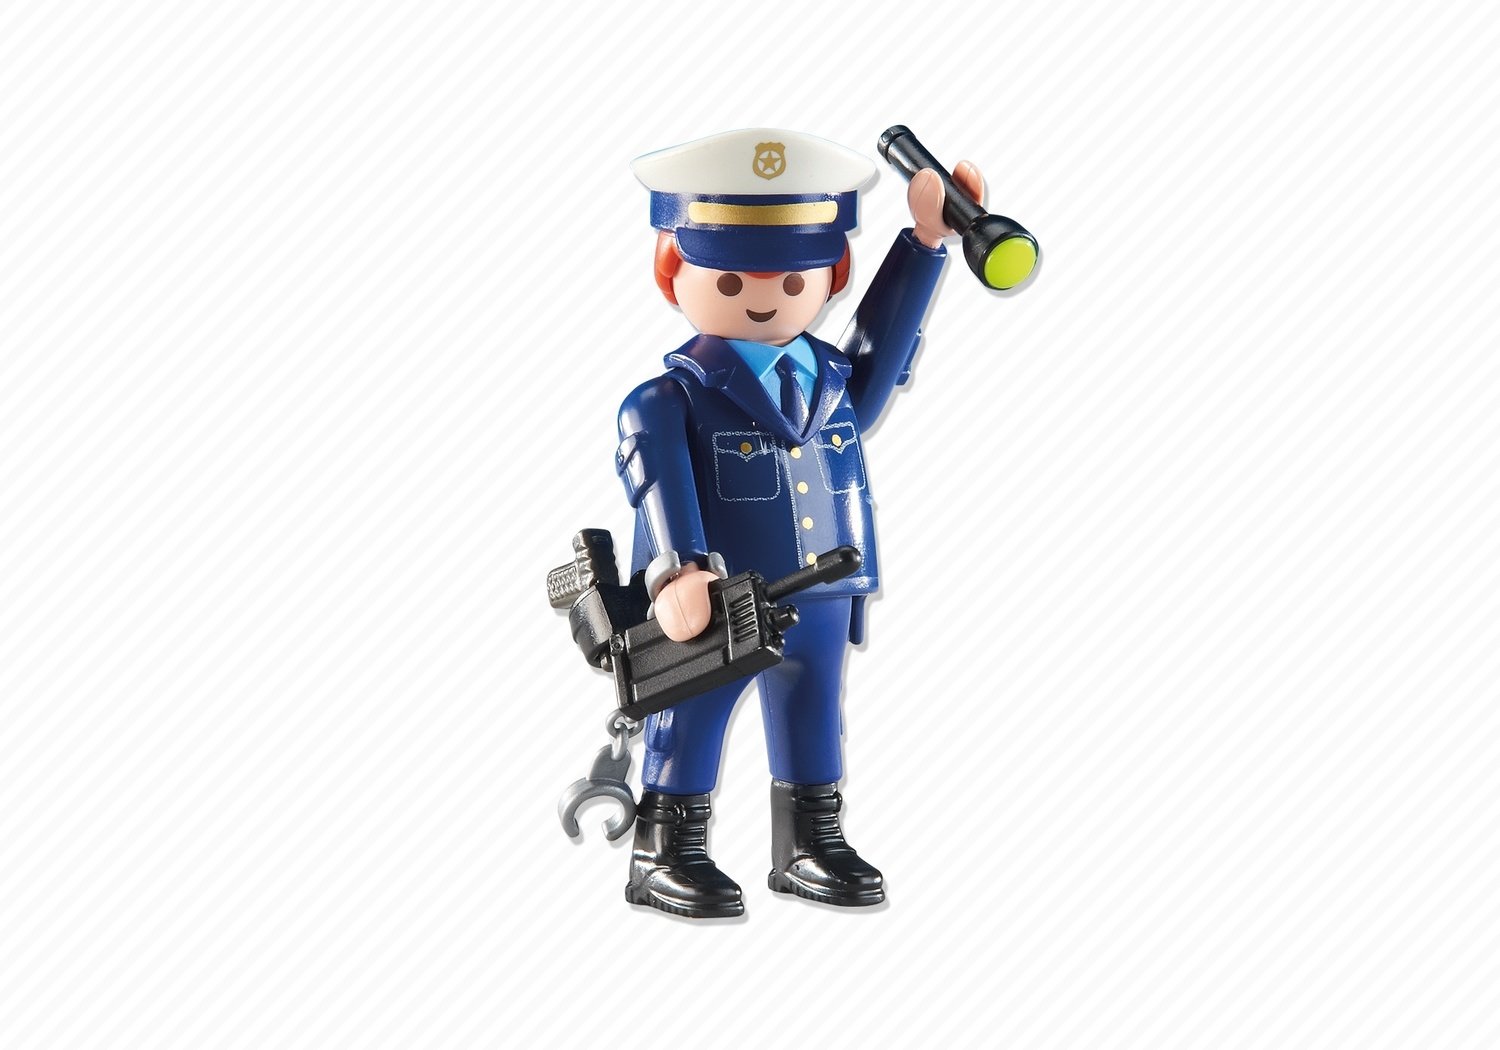 Playmobil Policeman